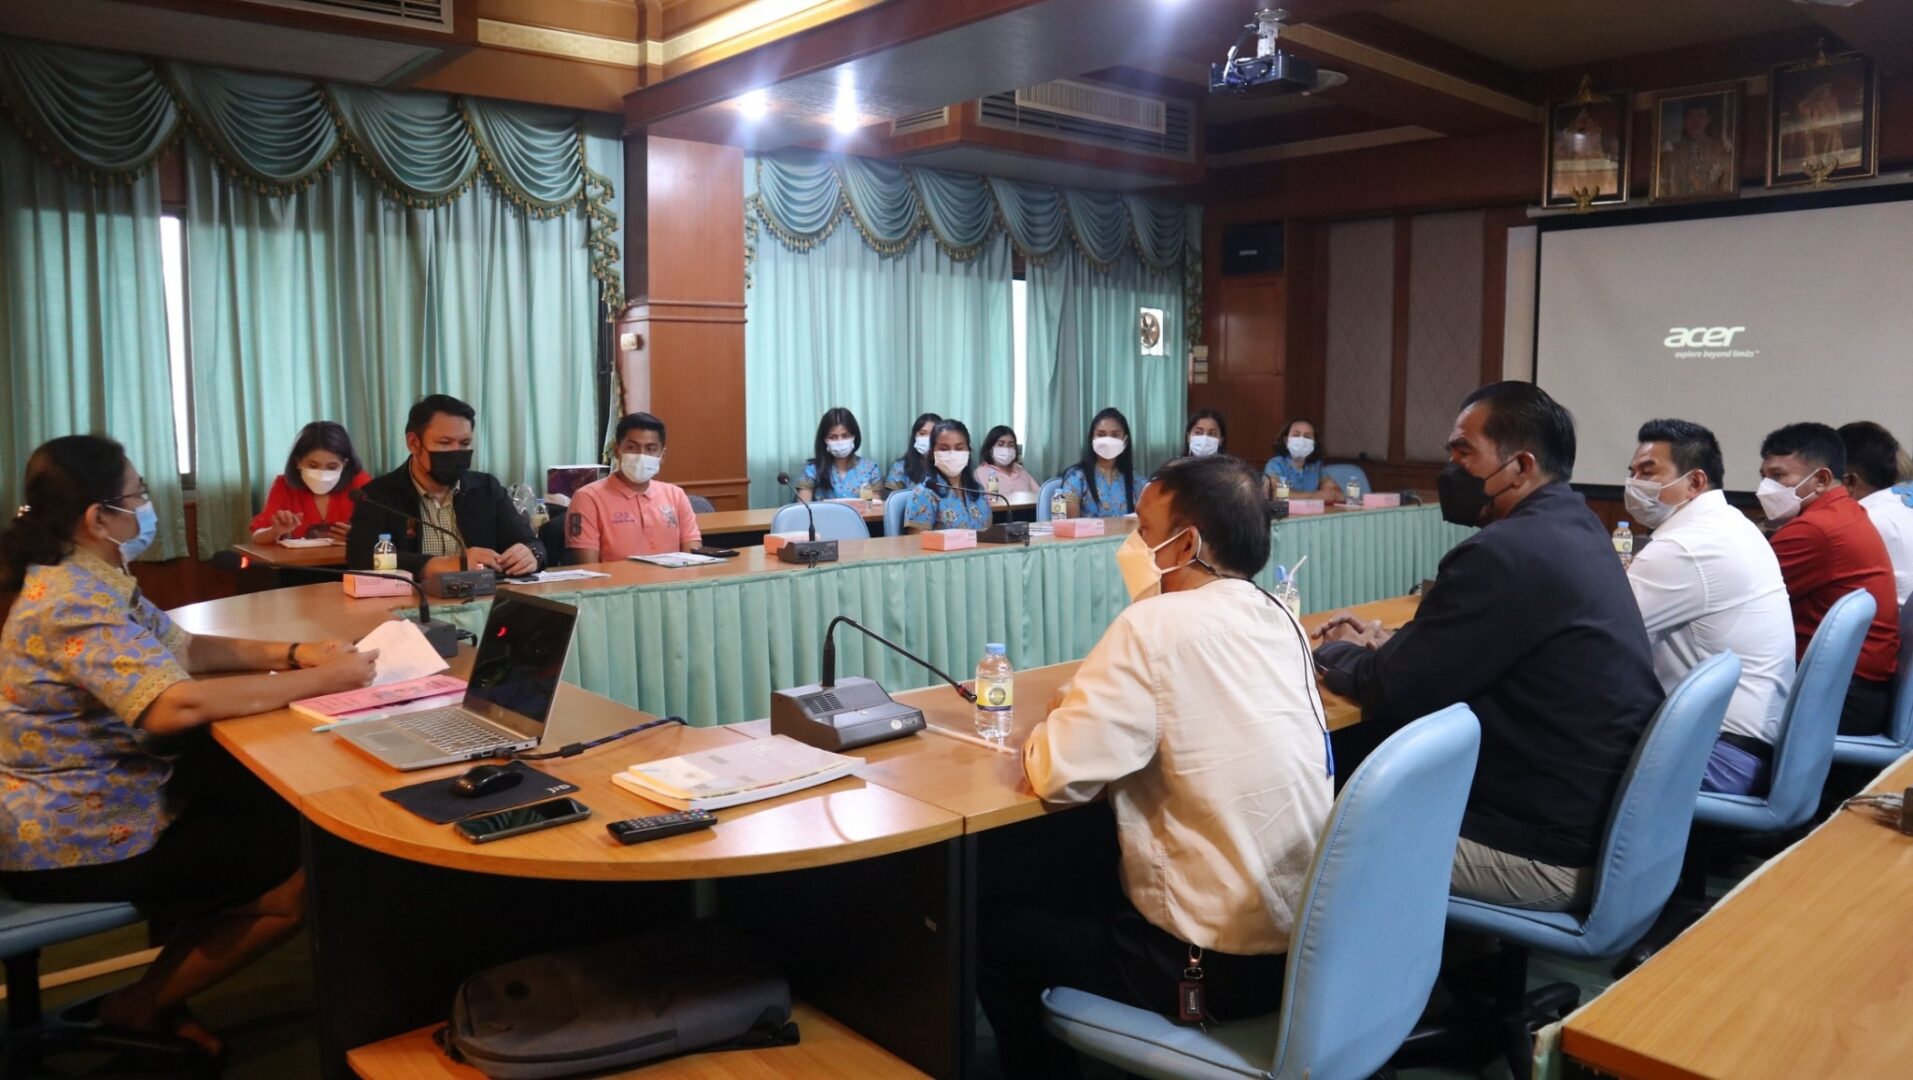 WU and Thaiburi Subdistrict Administration Organization visit Saman Khun Wittayatan School: Enhance HighScope’s Active Learning Approach